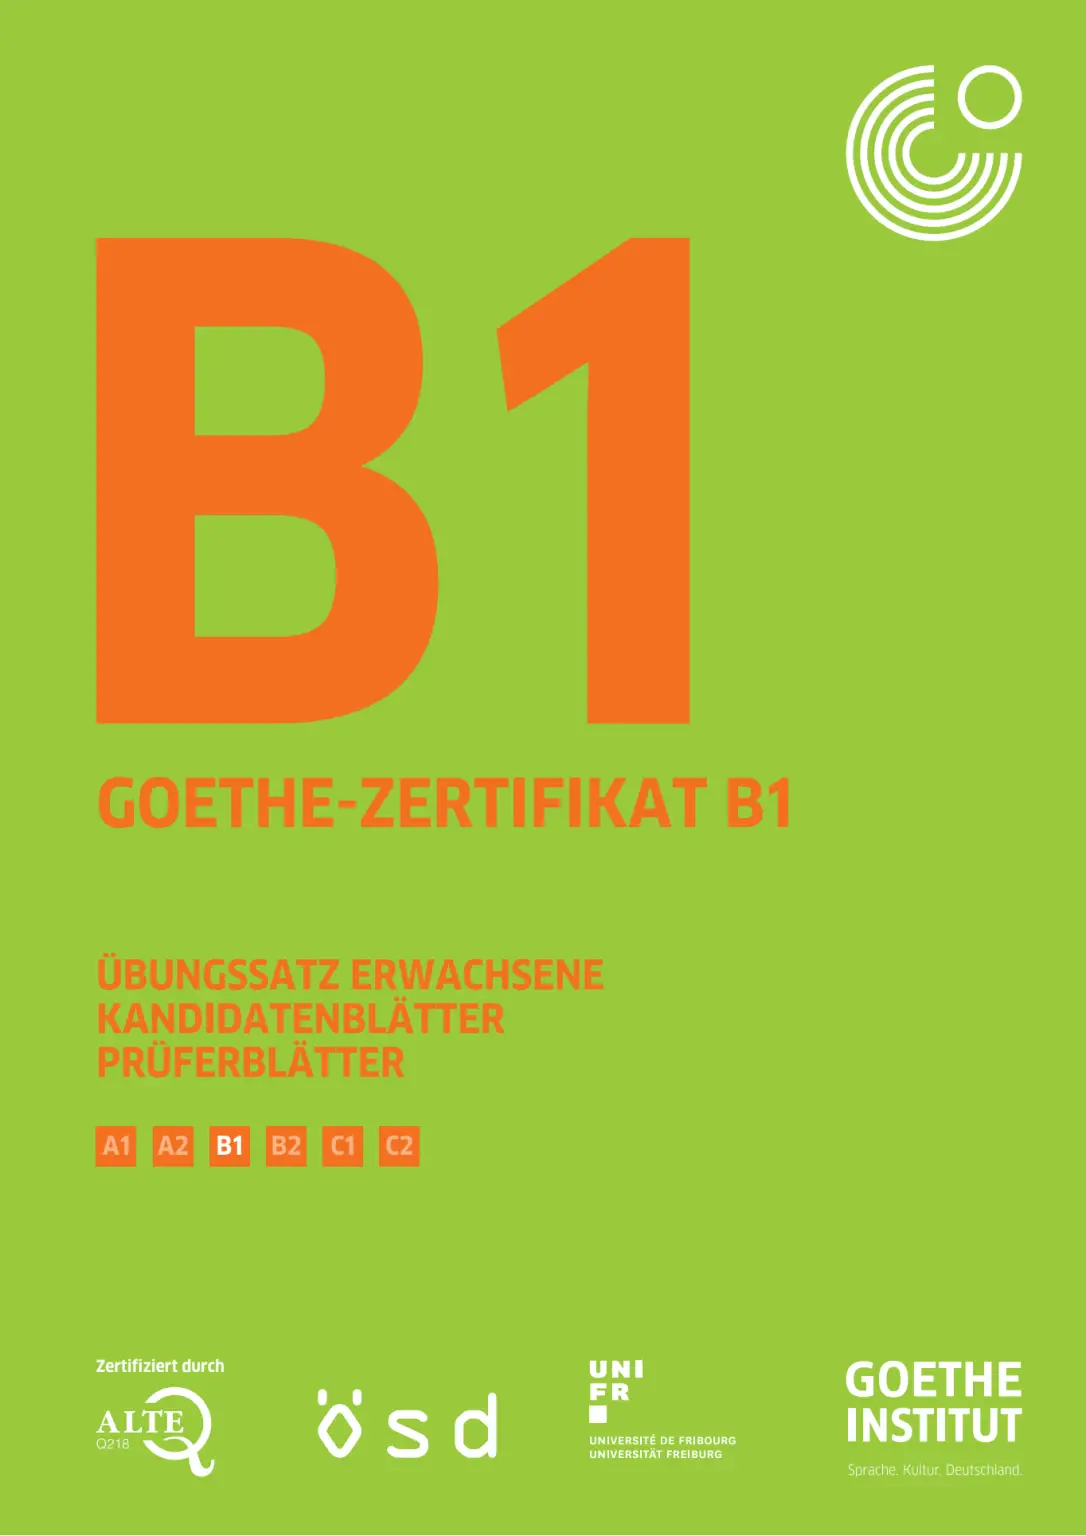 Rich Results on Google's SERP when searching for ''Goethe-Zertifikat-B1-Ubungssatz-Erwachsene-Kandidatenblatte-Pruferblatter''